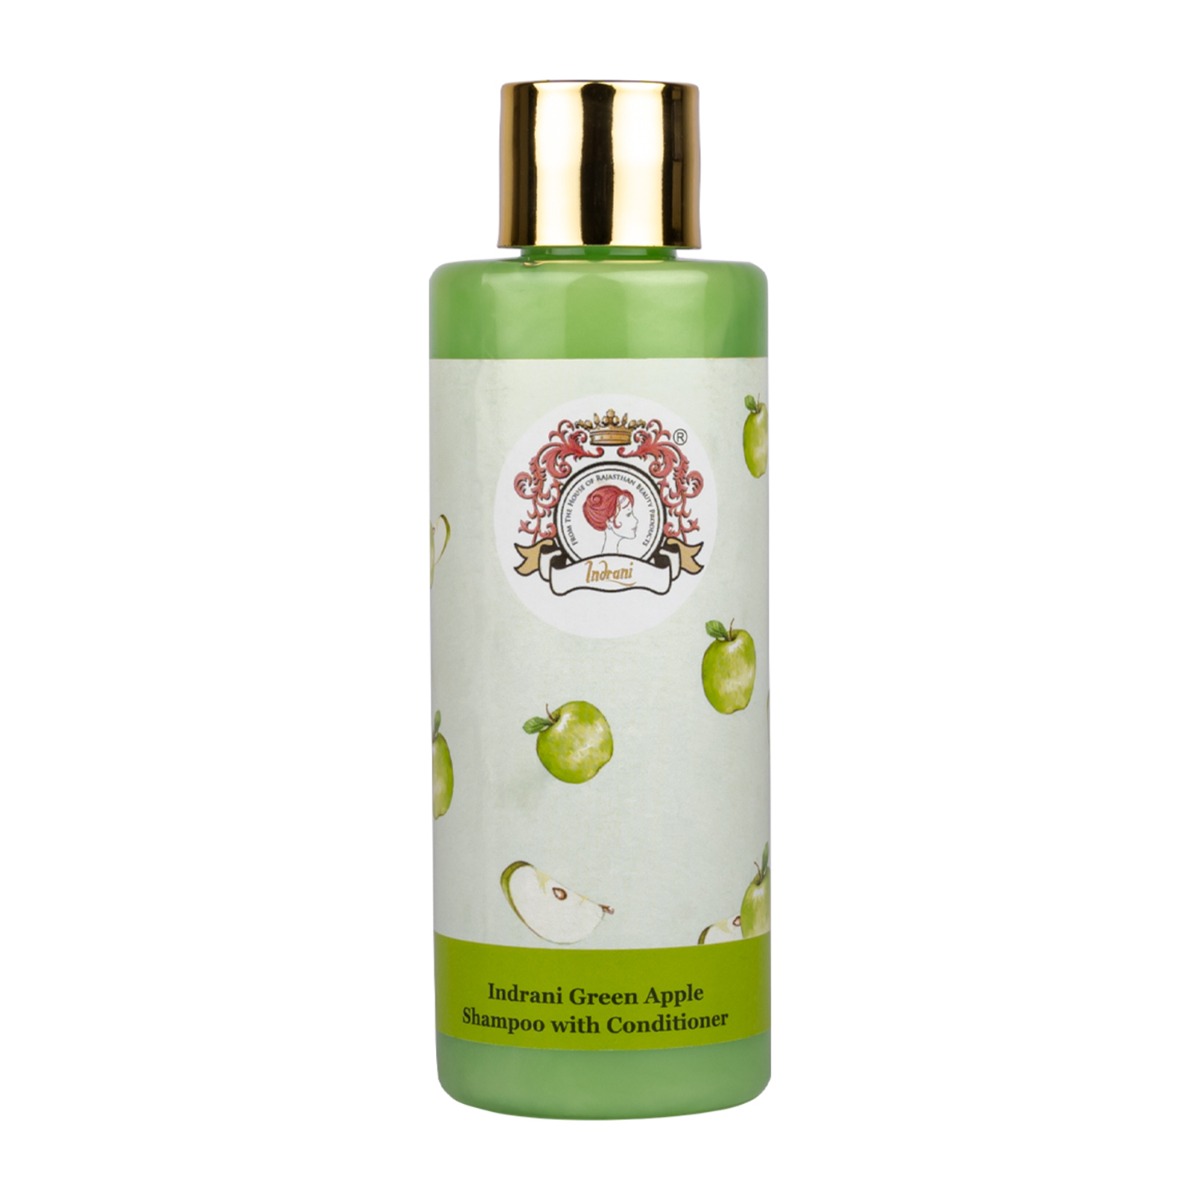 Indrani Green Apple Shampoo, 100ml